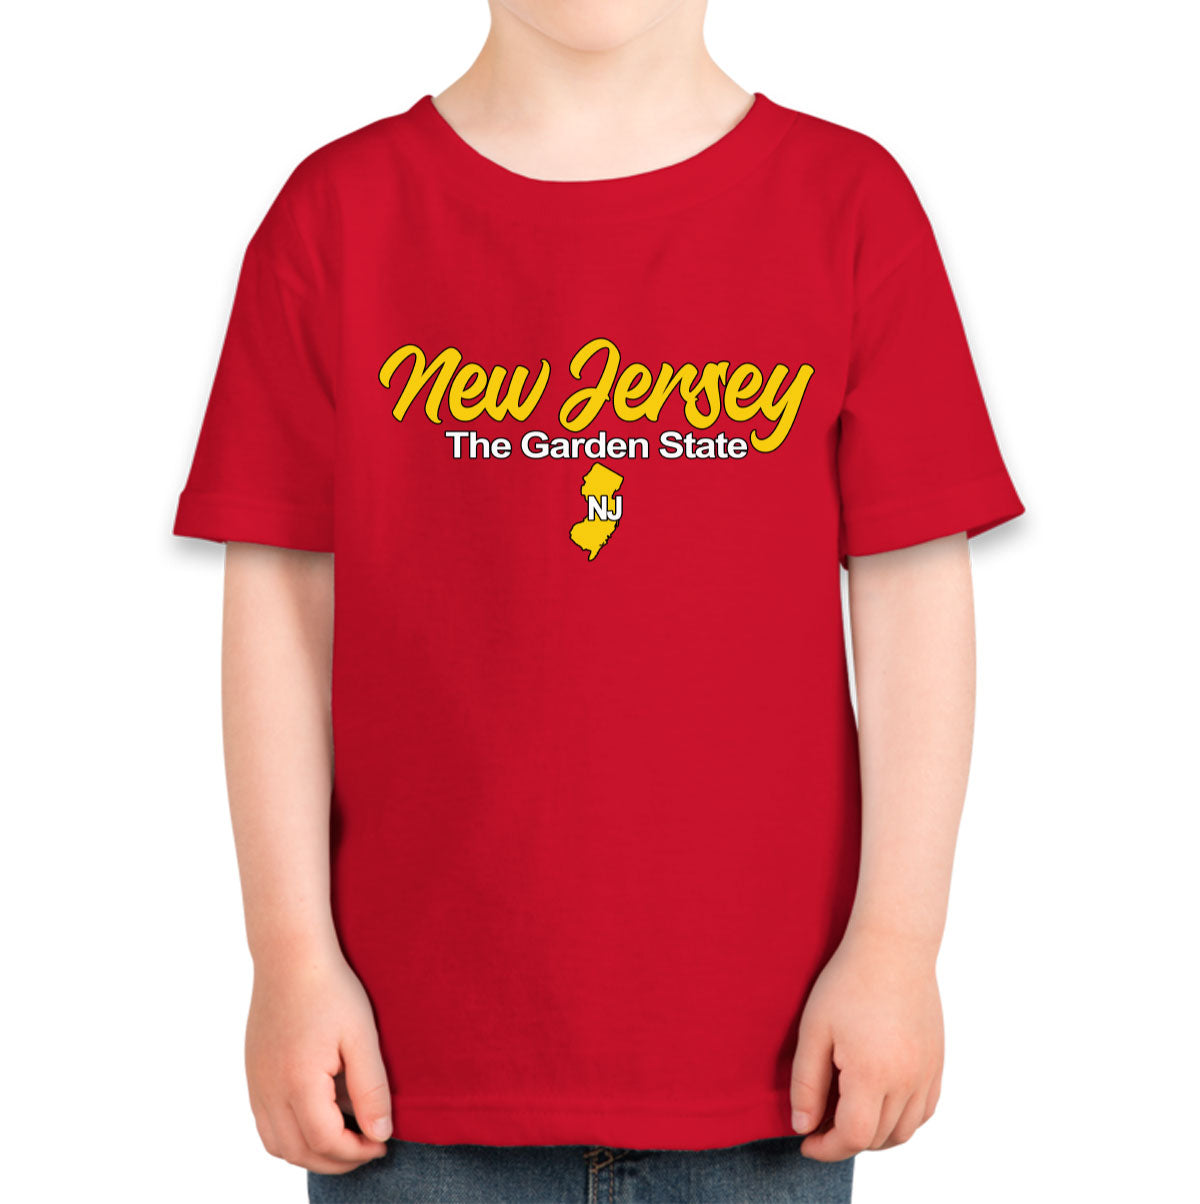 New Jersey The Garden State Toddler T-shirt